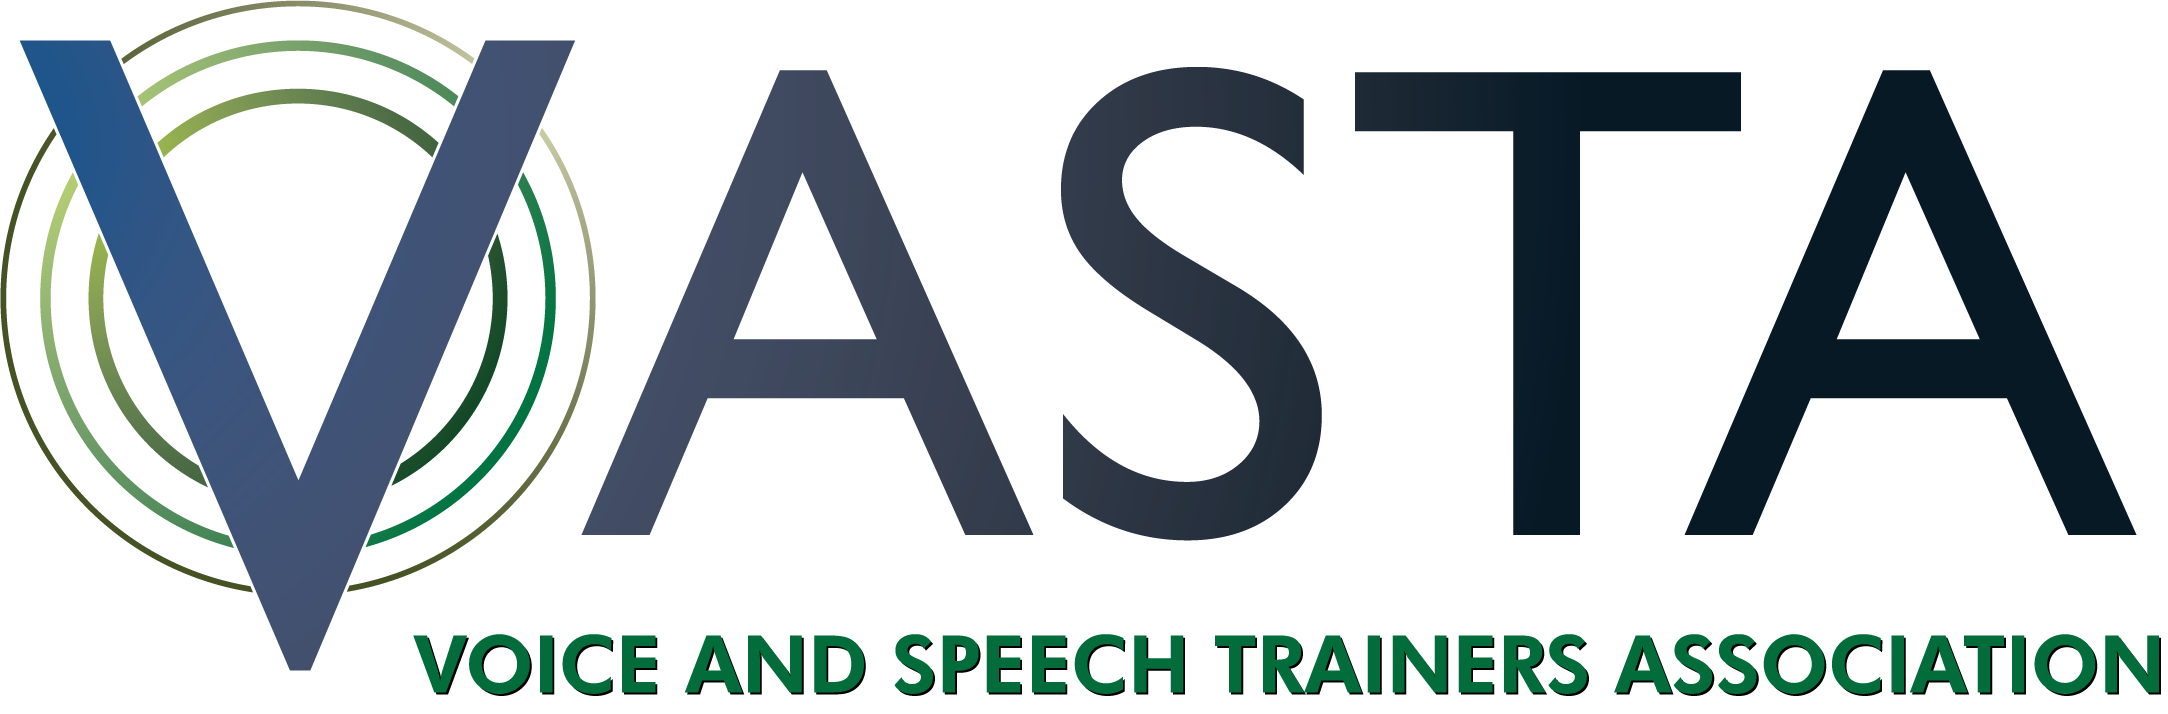 VASTA_Logo.png